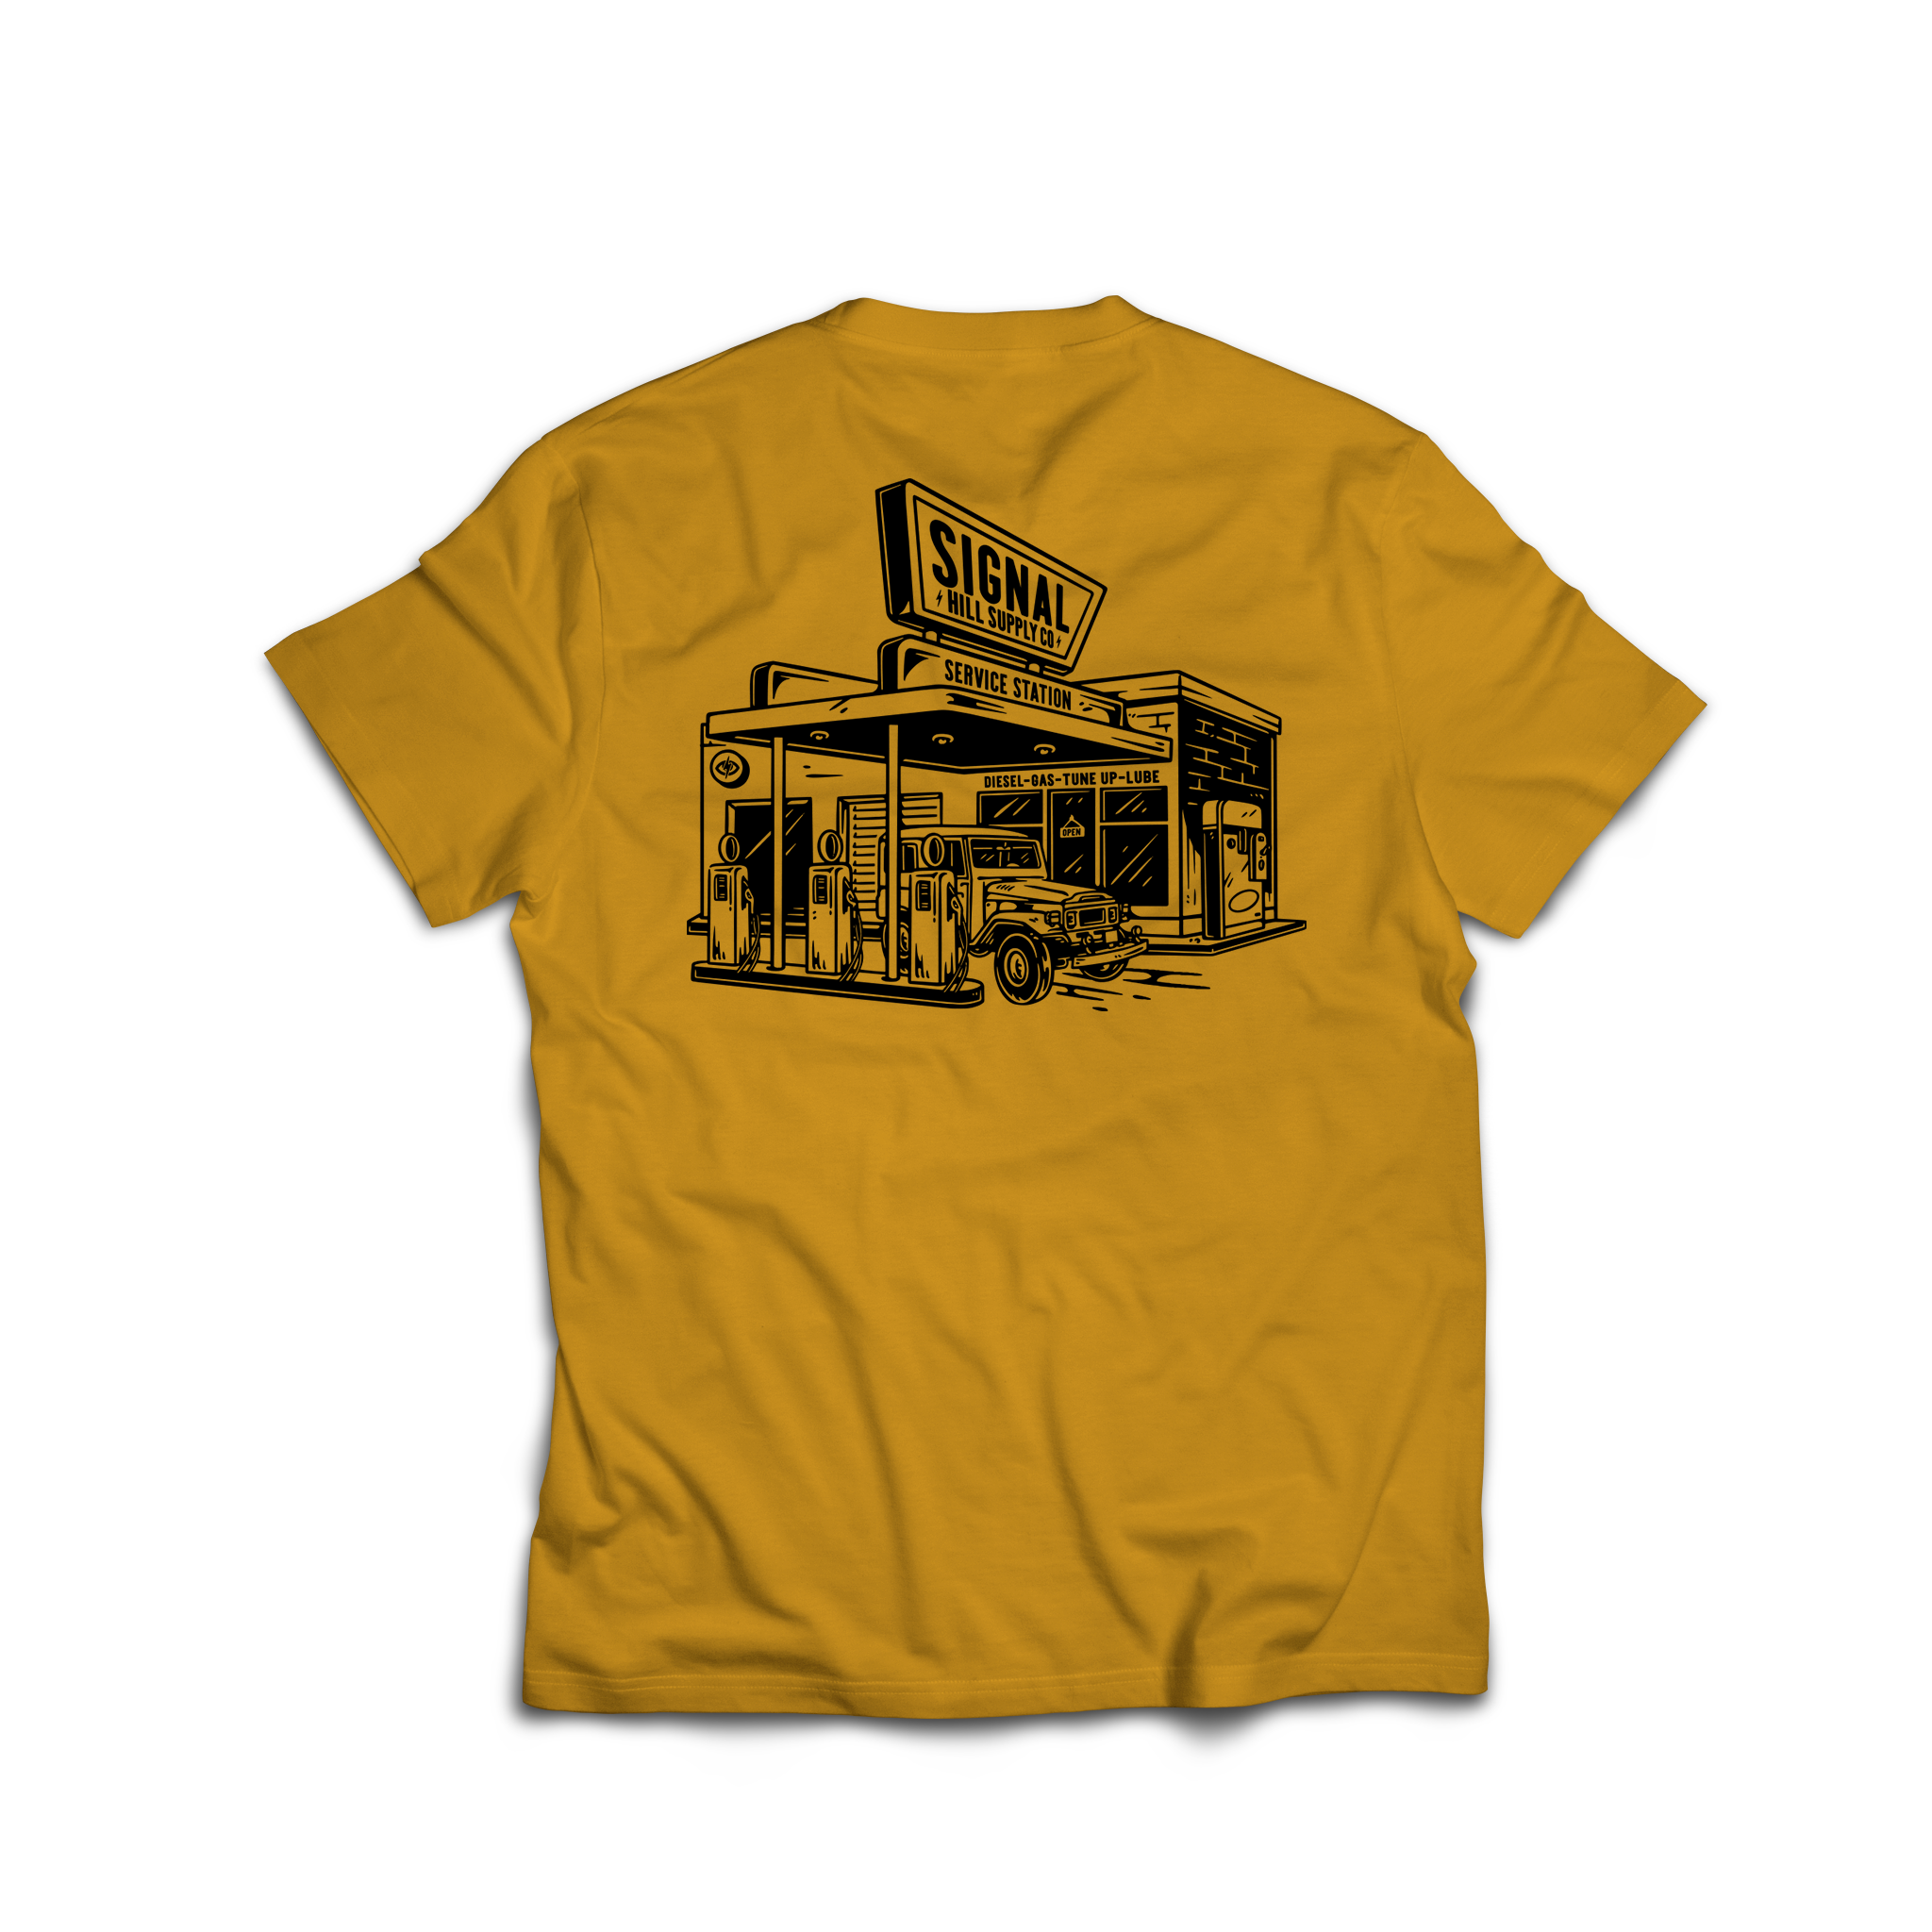 Service Station - Shirt